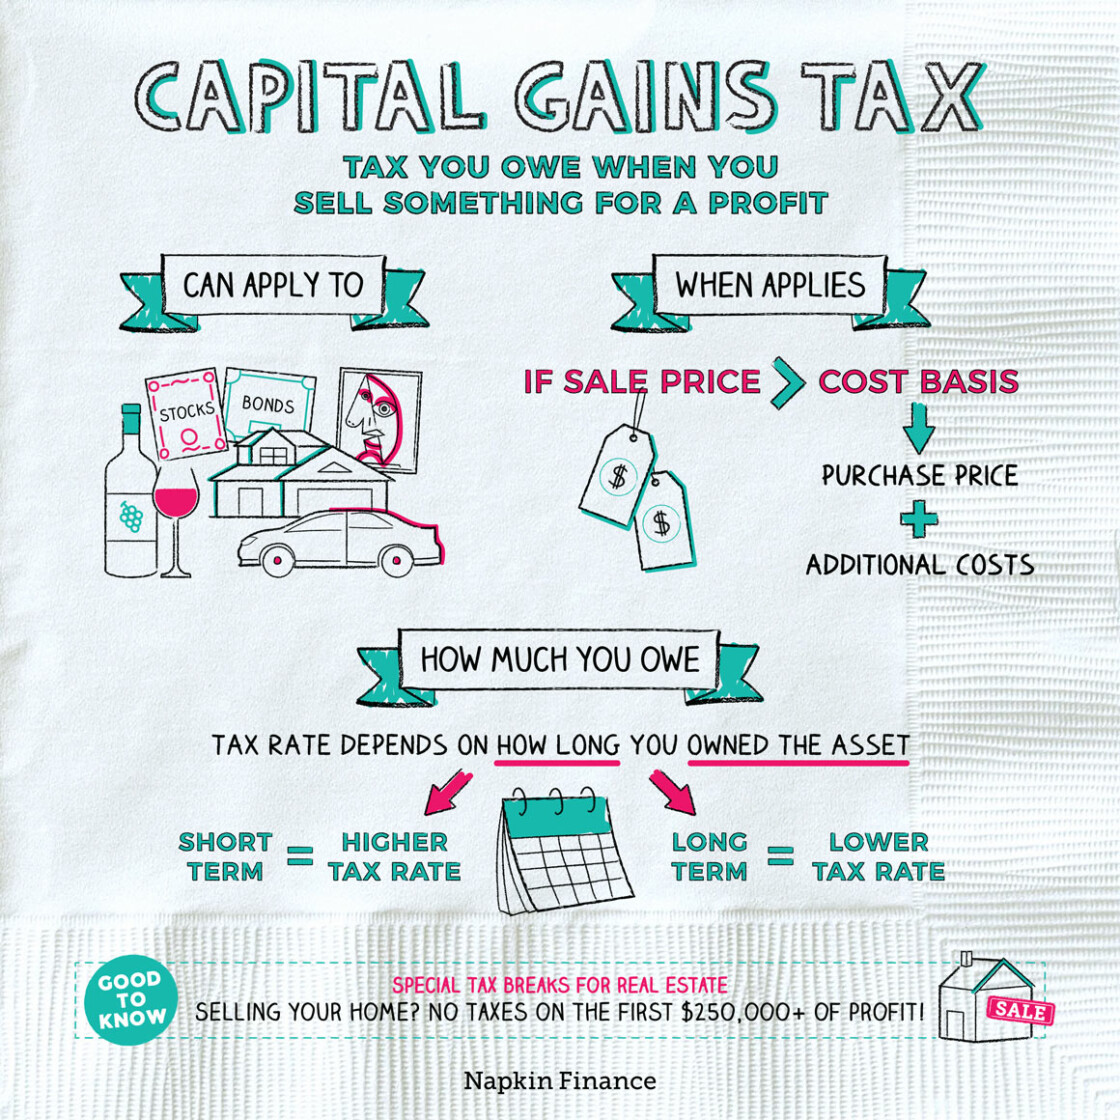 Capital Gains Tax Guide Napkin Finance